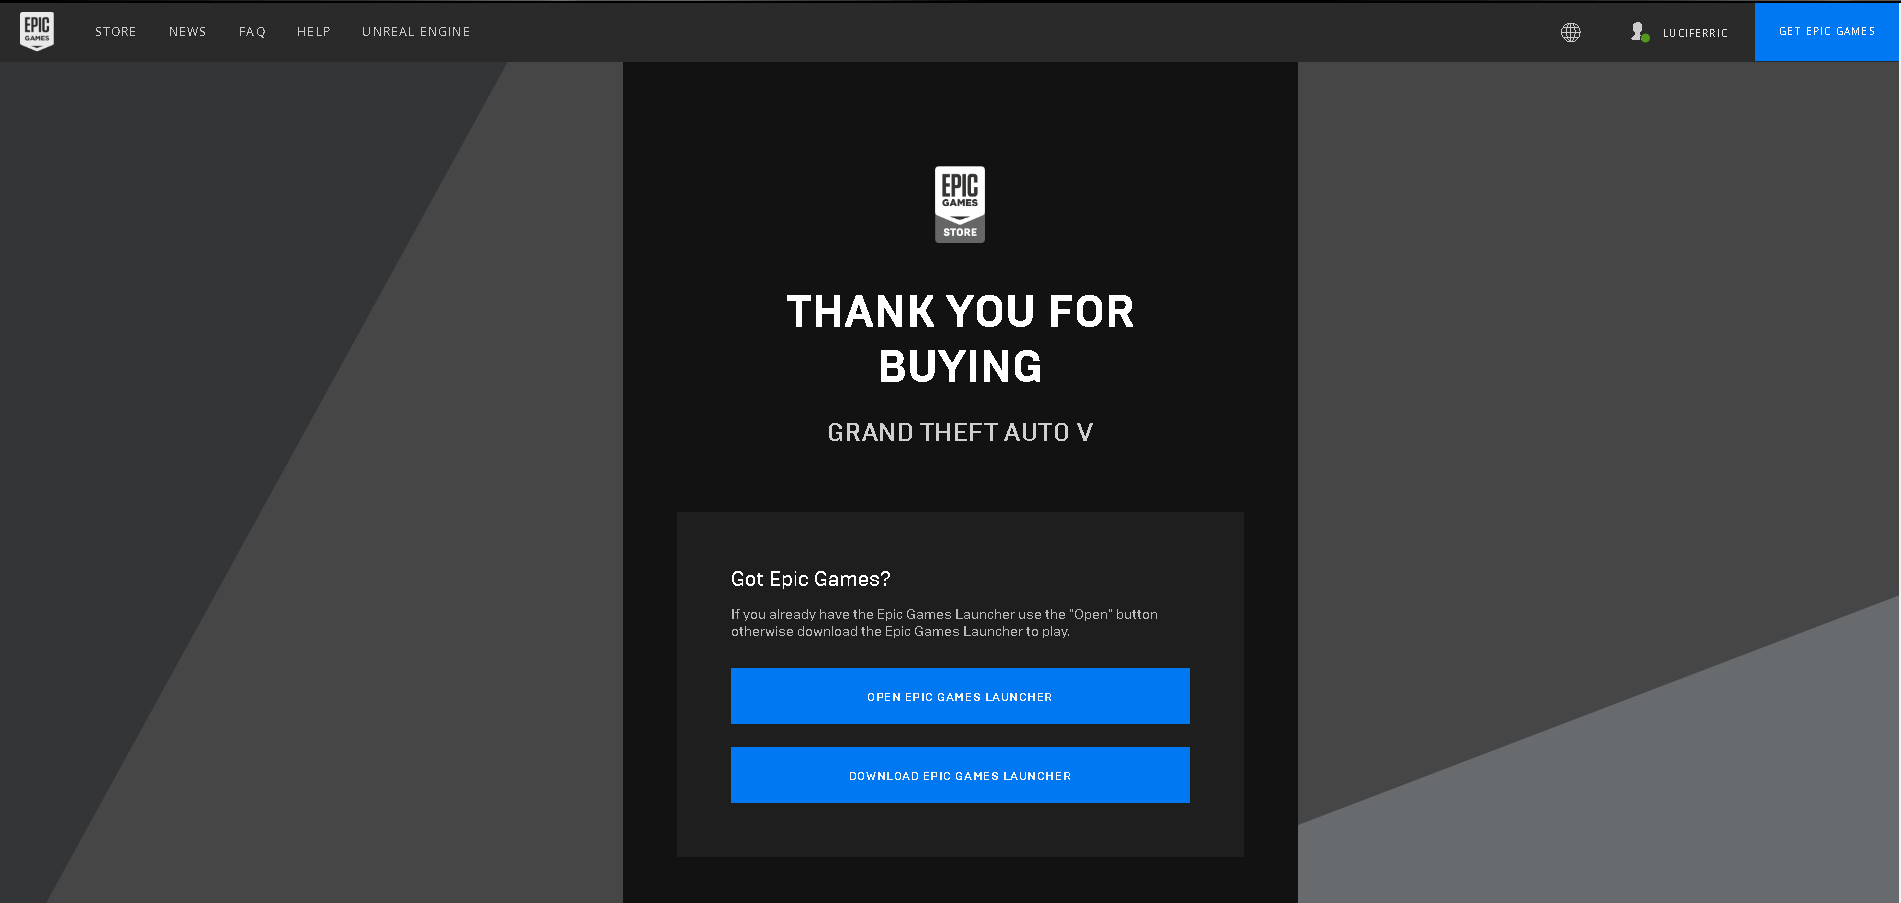 Grand Theft Auto V - Grand Theft Auto V_ Premium Edition